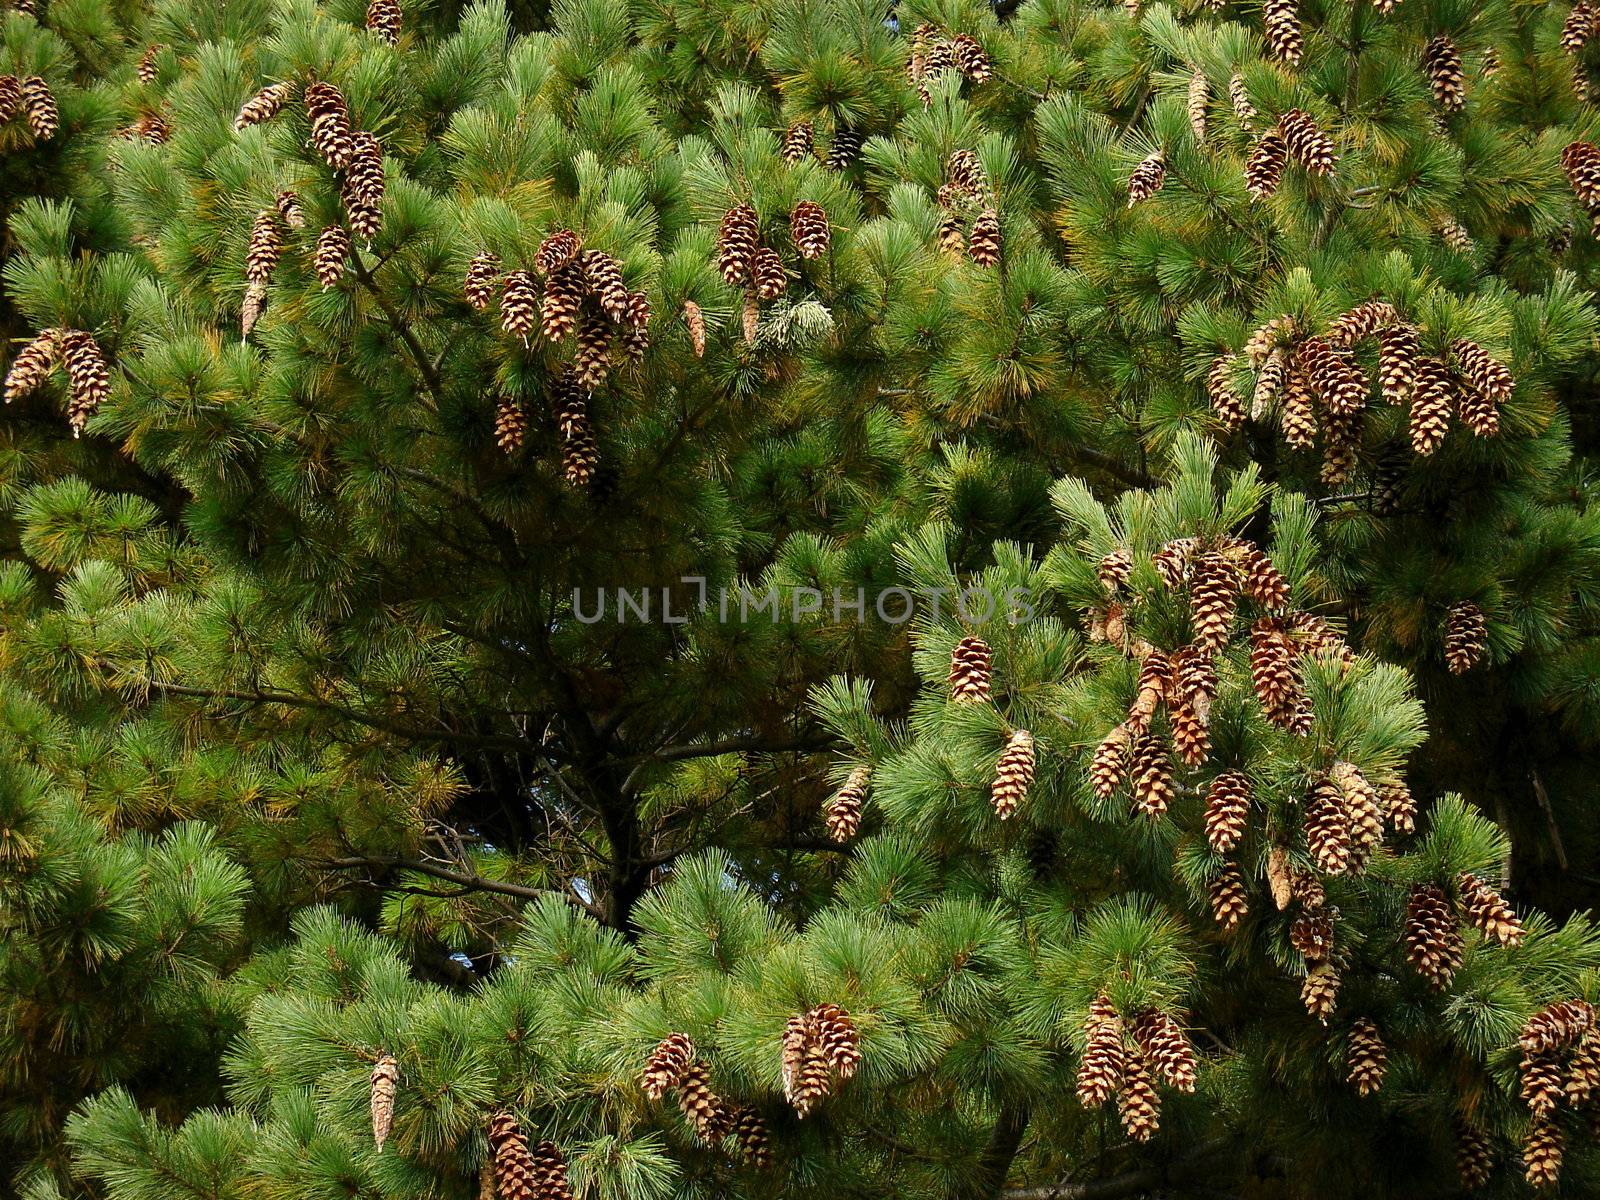 Background of pine tree needles with cones